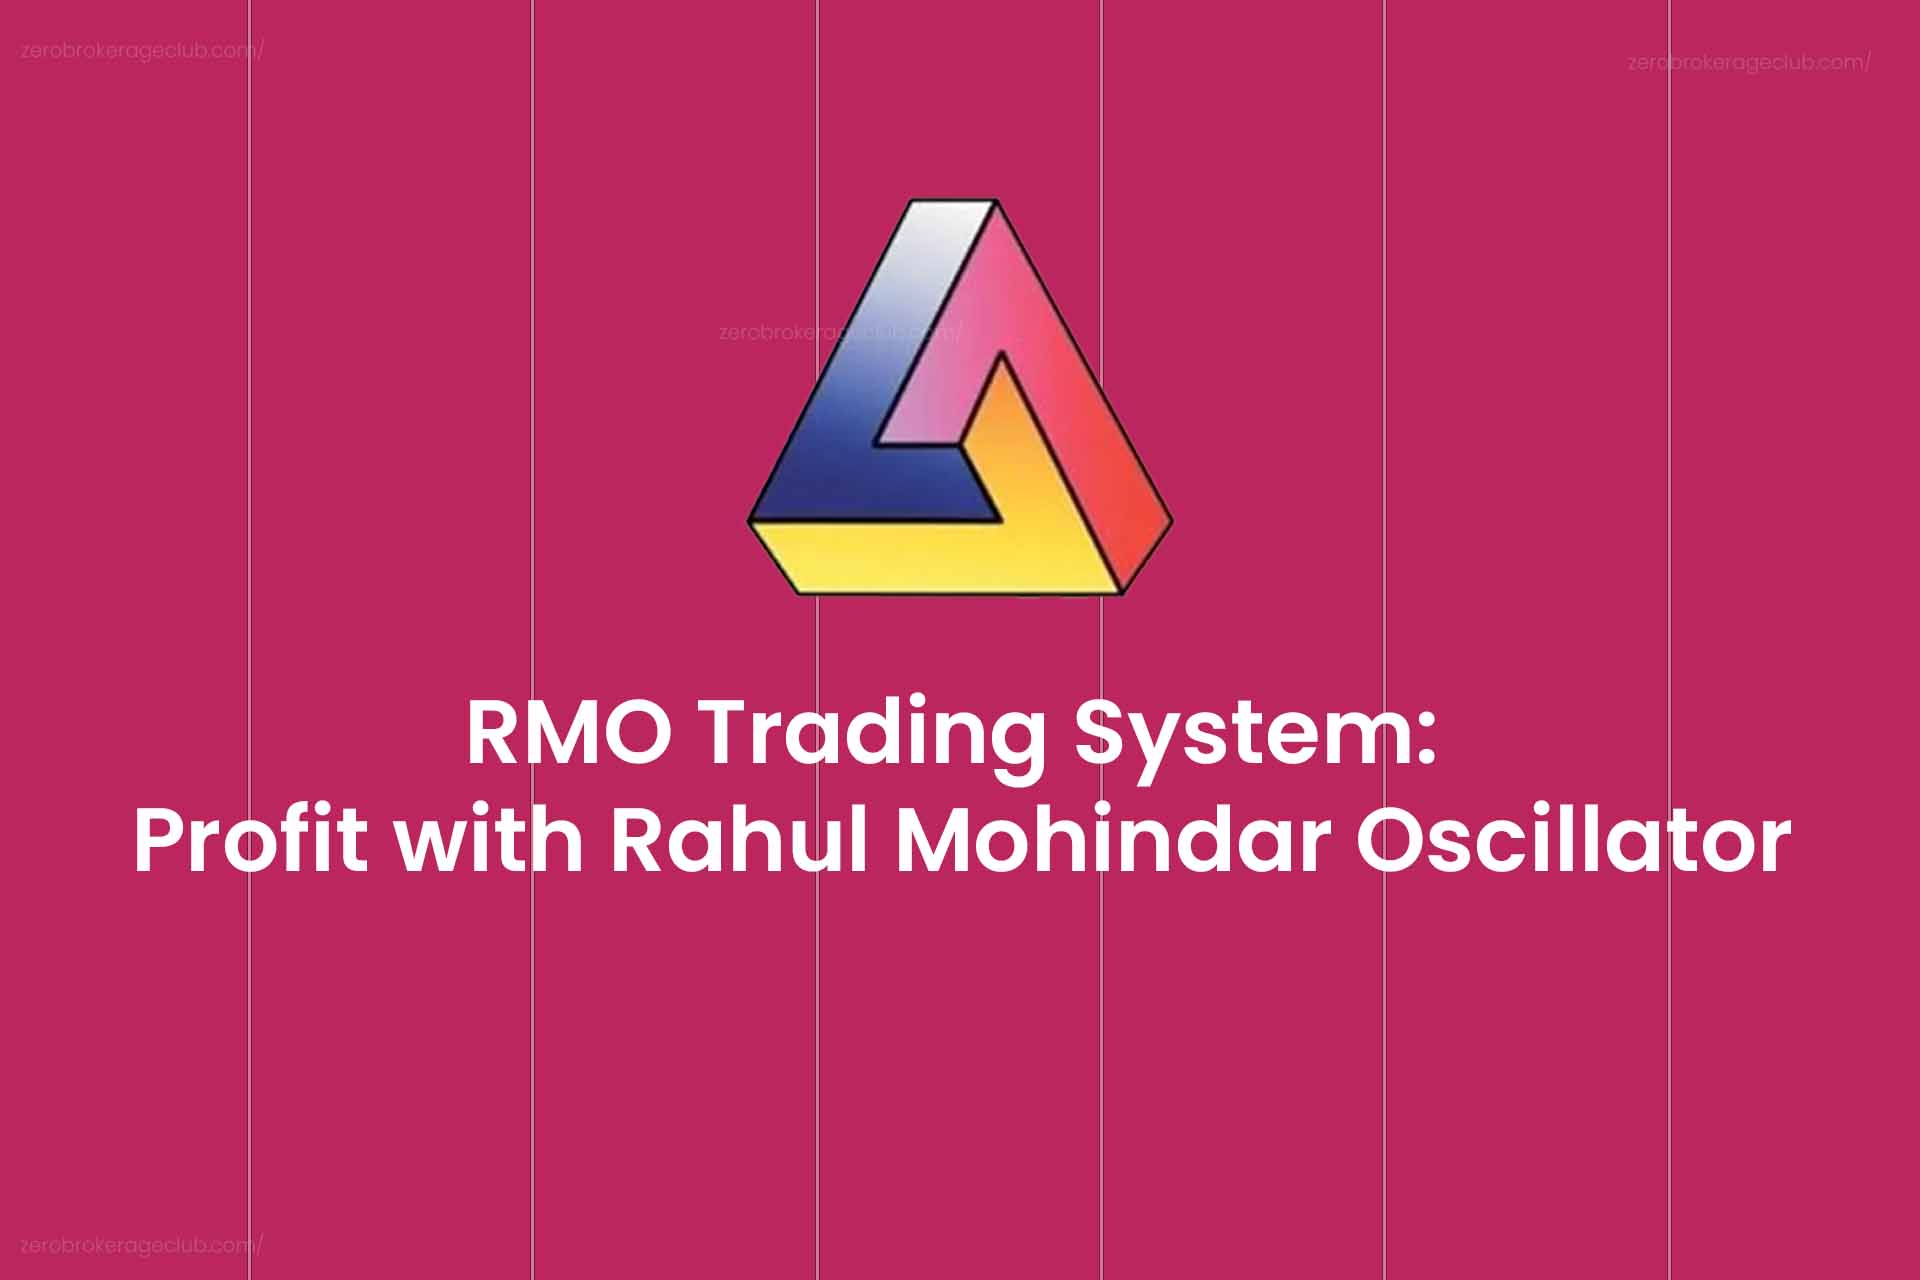 RMO Trading System: Profit with Rahul Mohindar Oscillator